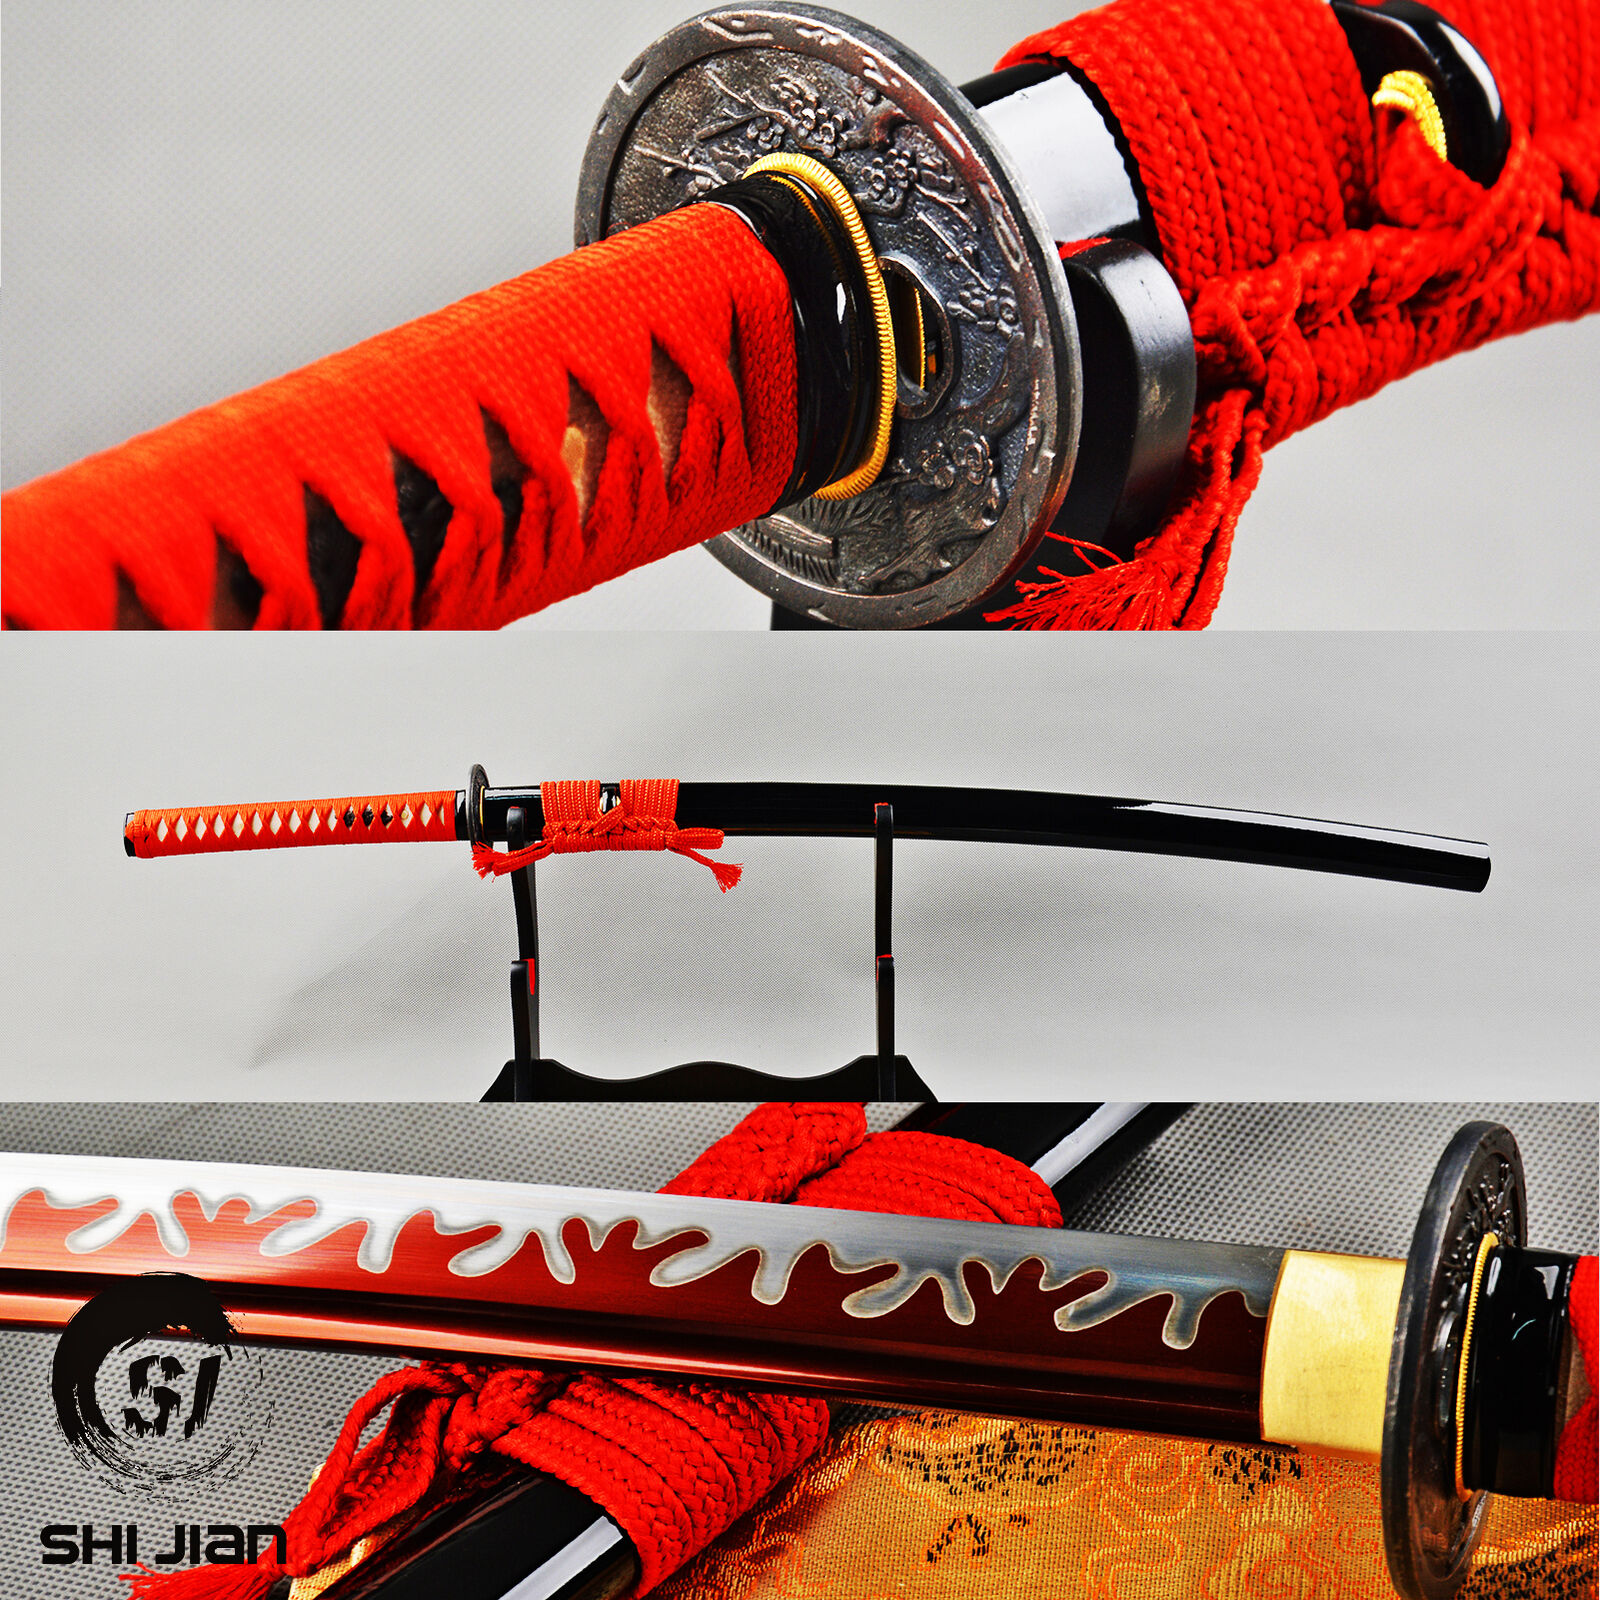 Hot Red Japanese samurai katana sword carbon steel sharpened blade wavy hamon